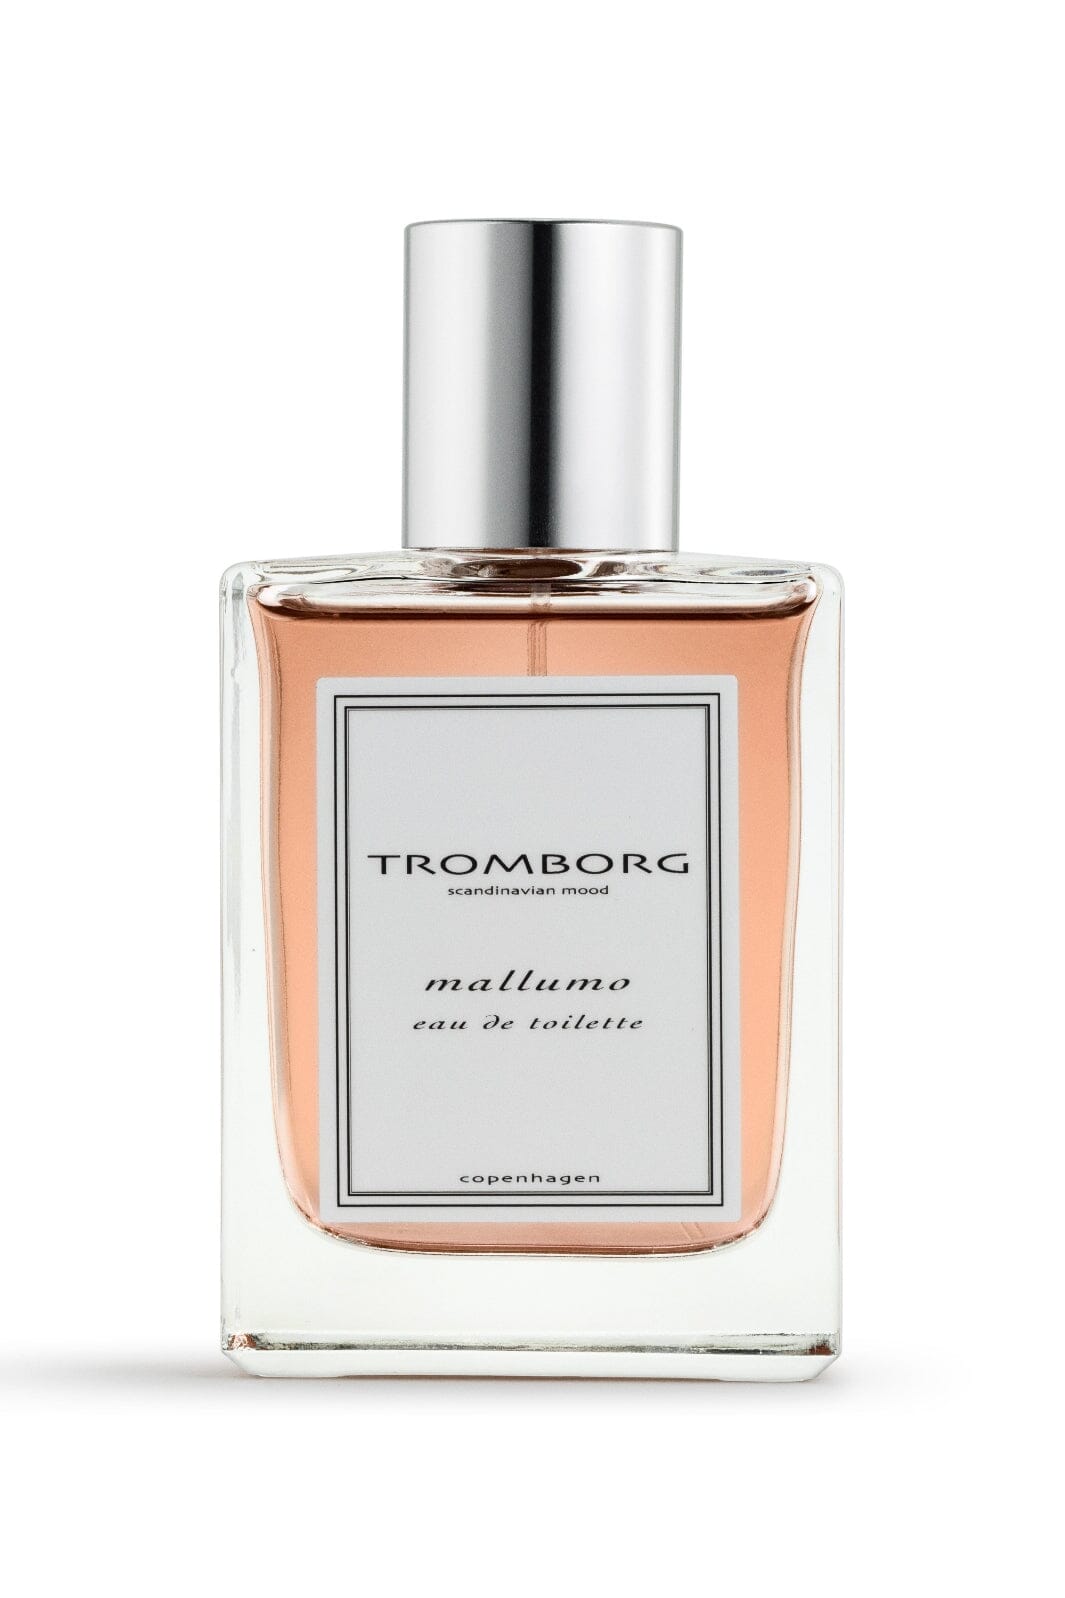 Tromborg - Eau De Toilette Mallumo Parfumer 